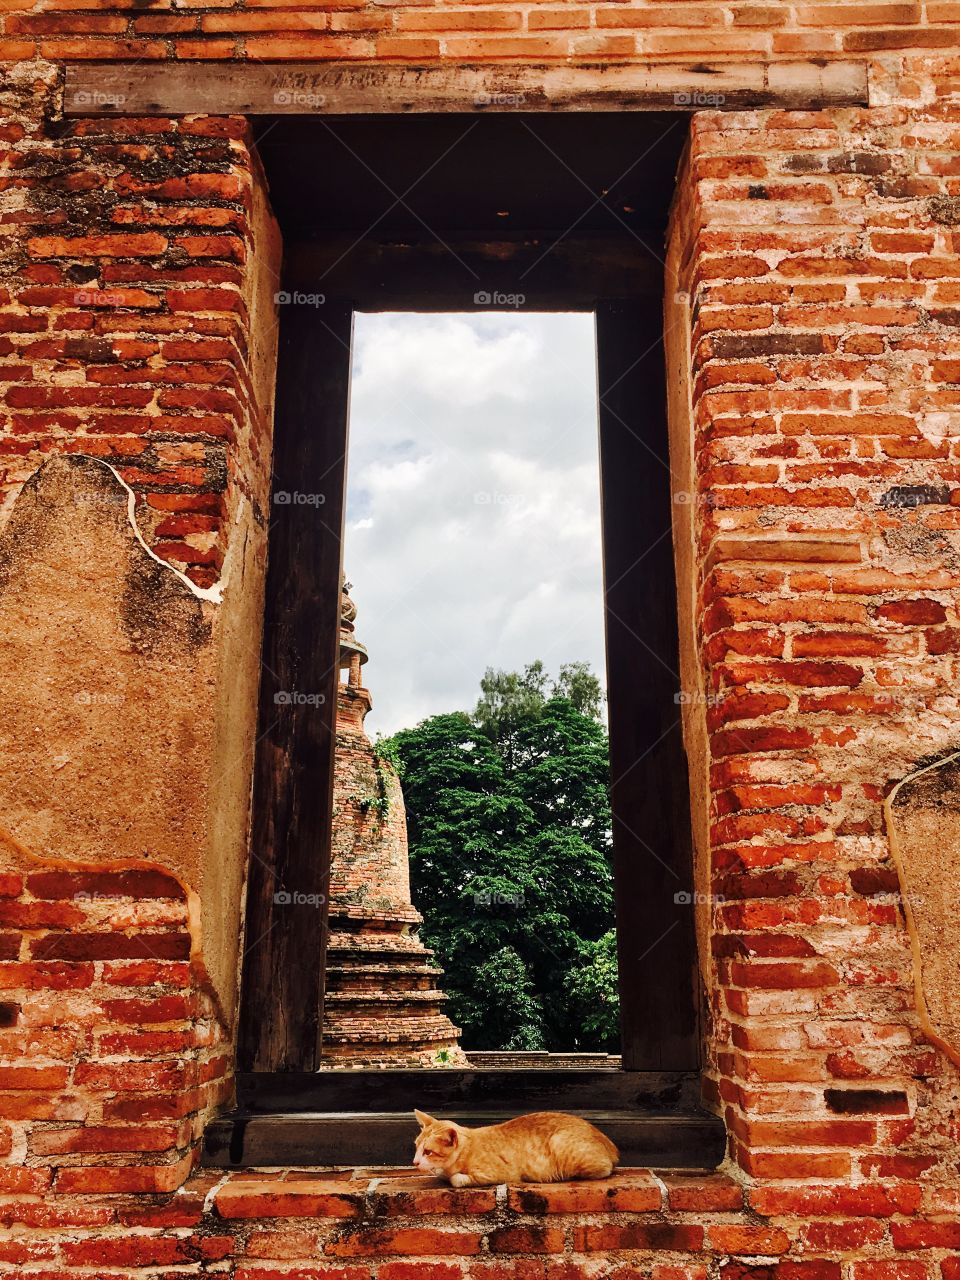 Historical temple window frame in Ayutthaya, thailand